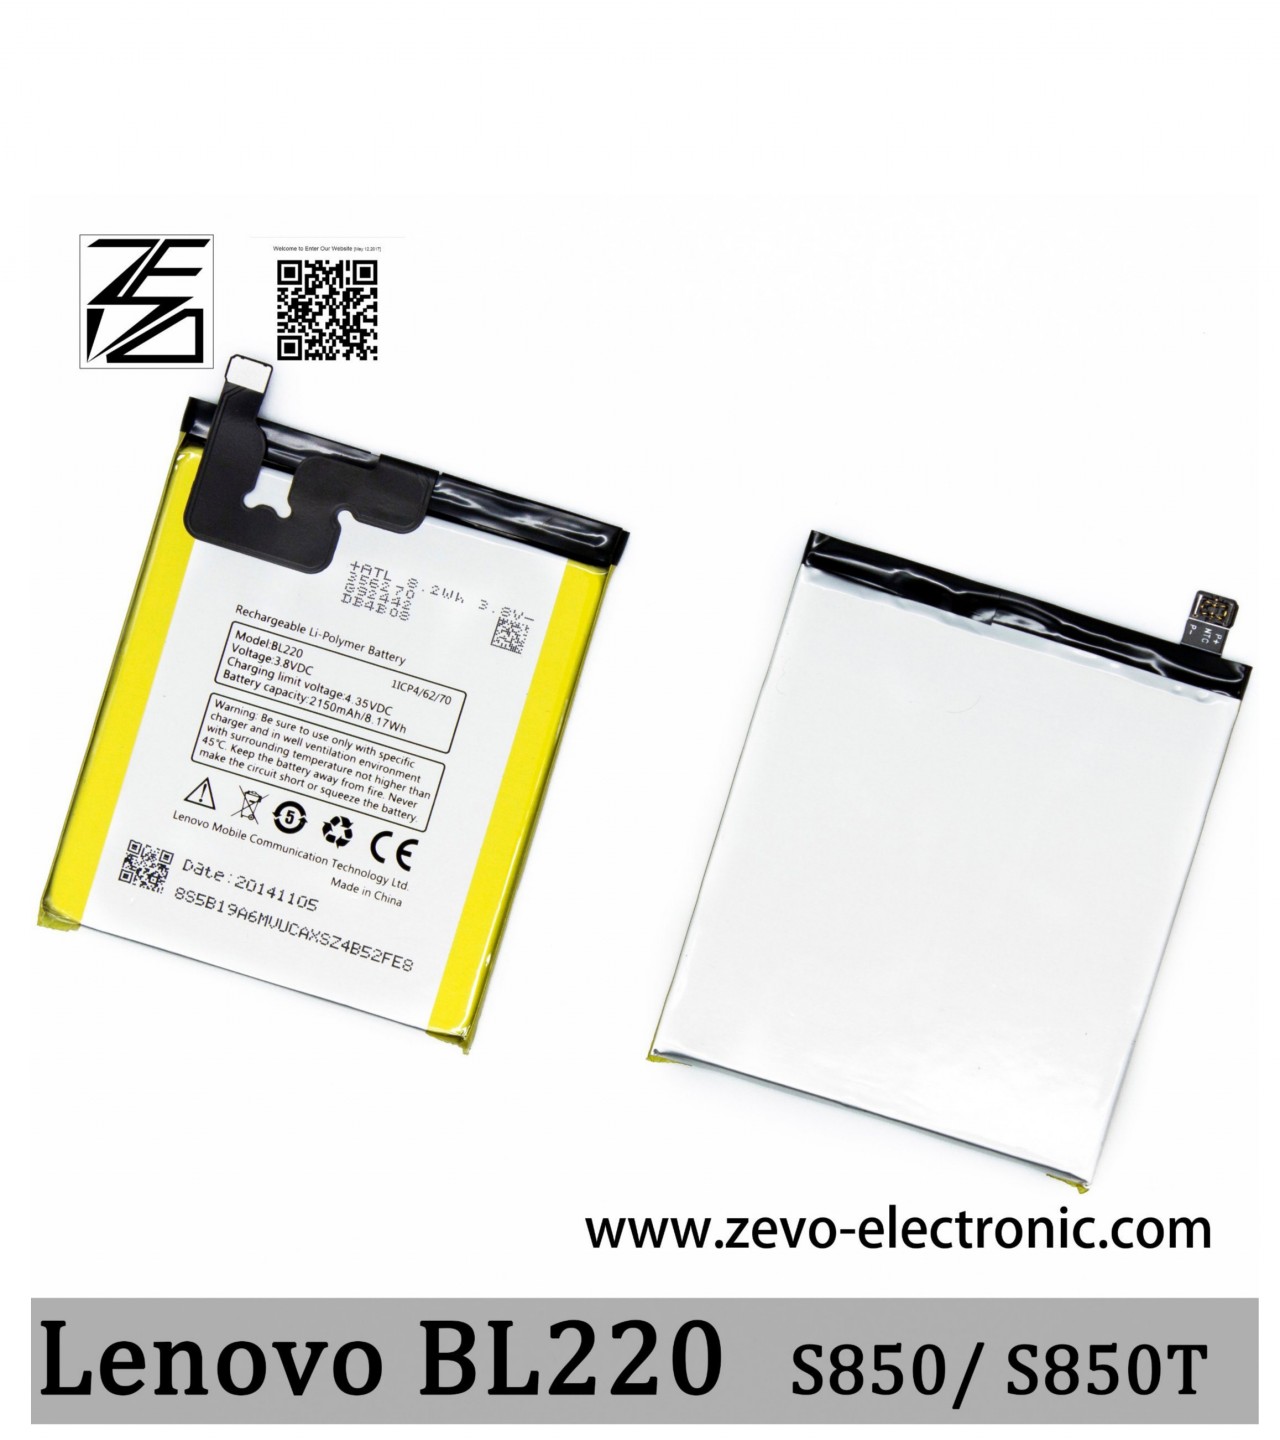 Lenovo BL220 battery For Lenovo S850 S850T with 2150 mAh Capacity- Black